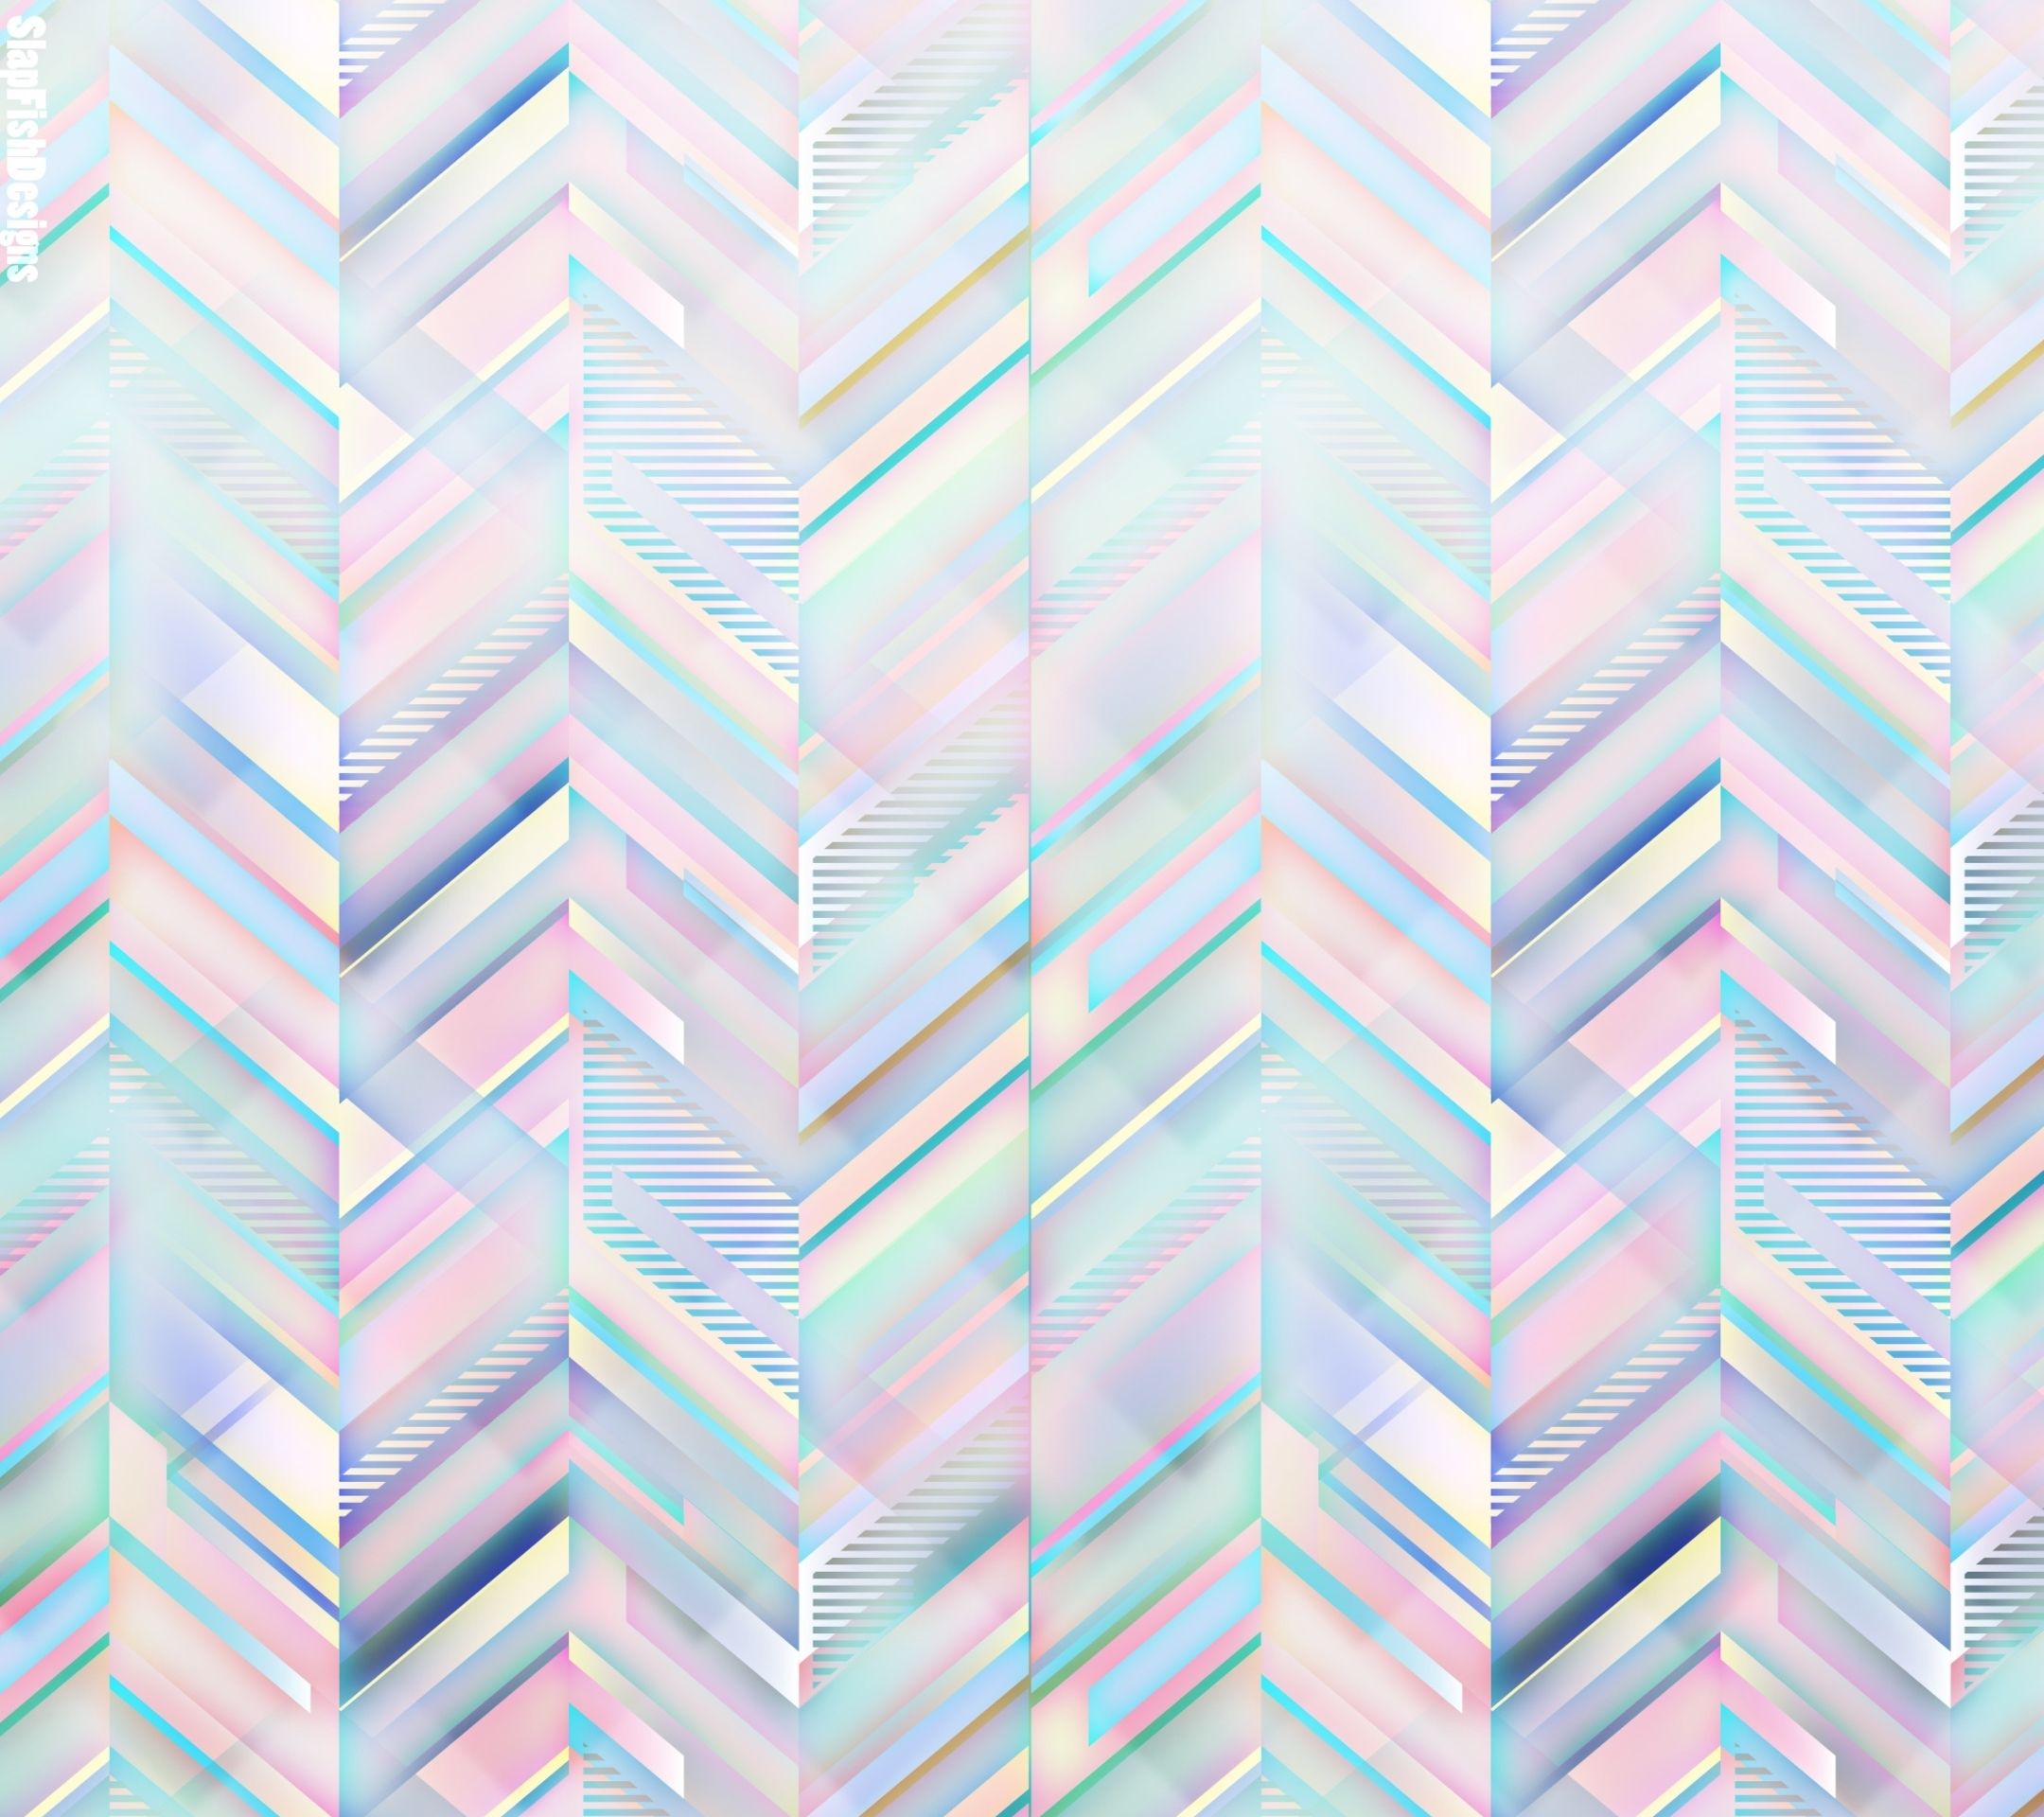 wallpaper tumblr patterns | Pattern Wallpapers Tumblr -wallpaper-hd ...